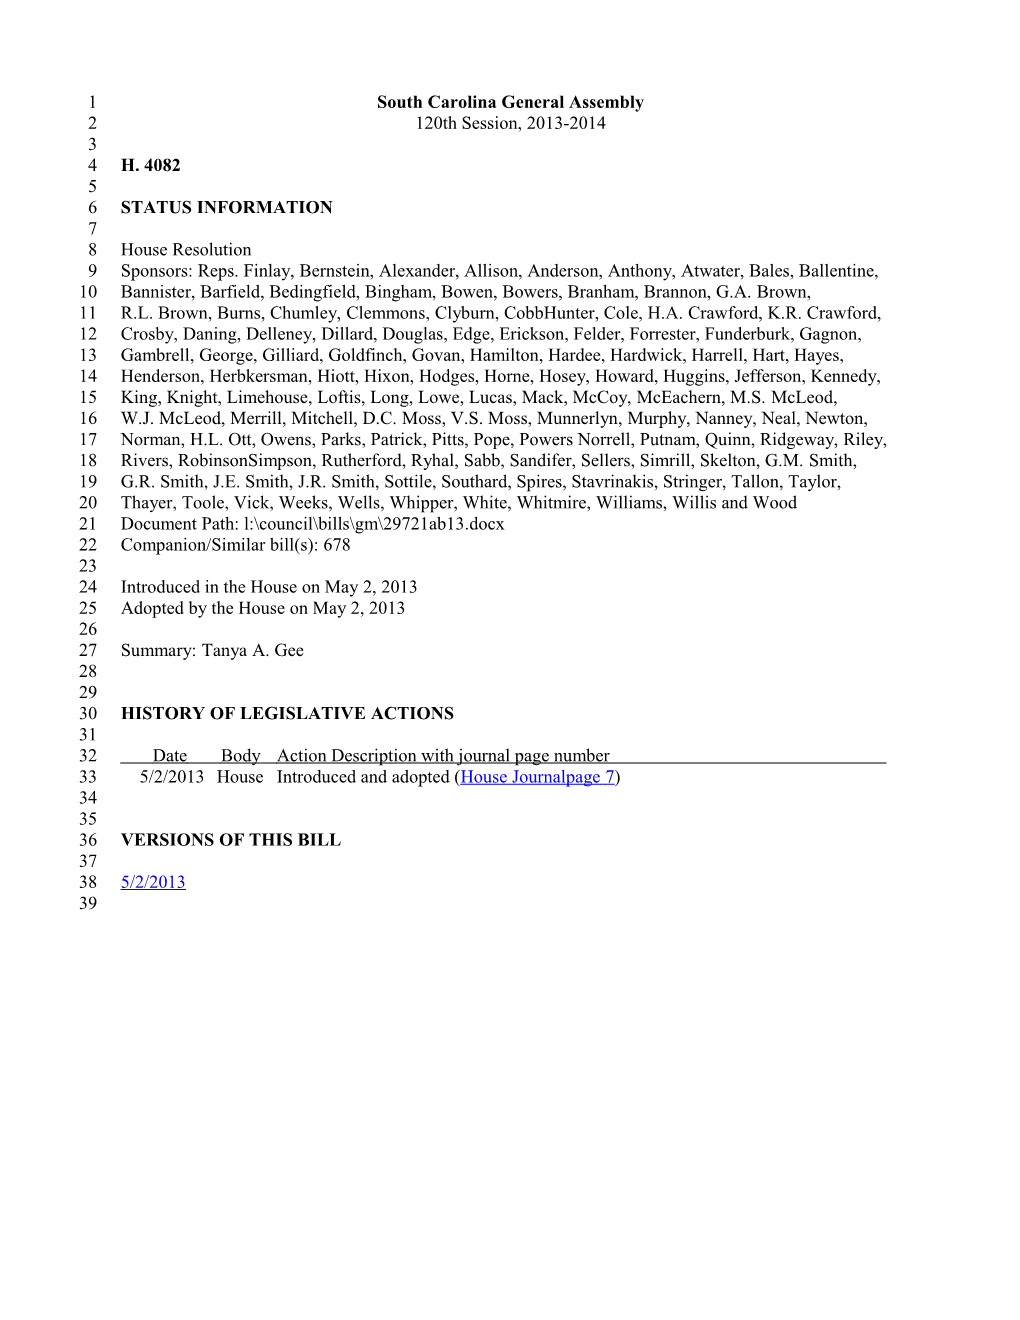 2013-2014 Bill 4082: Tanya A. Gee - South Carolina Legislature Online